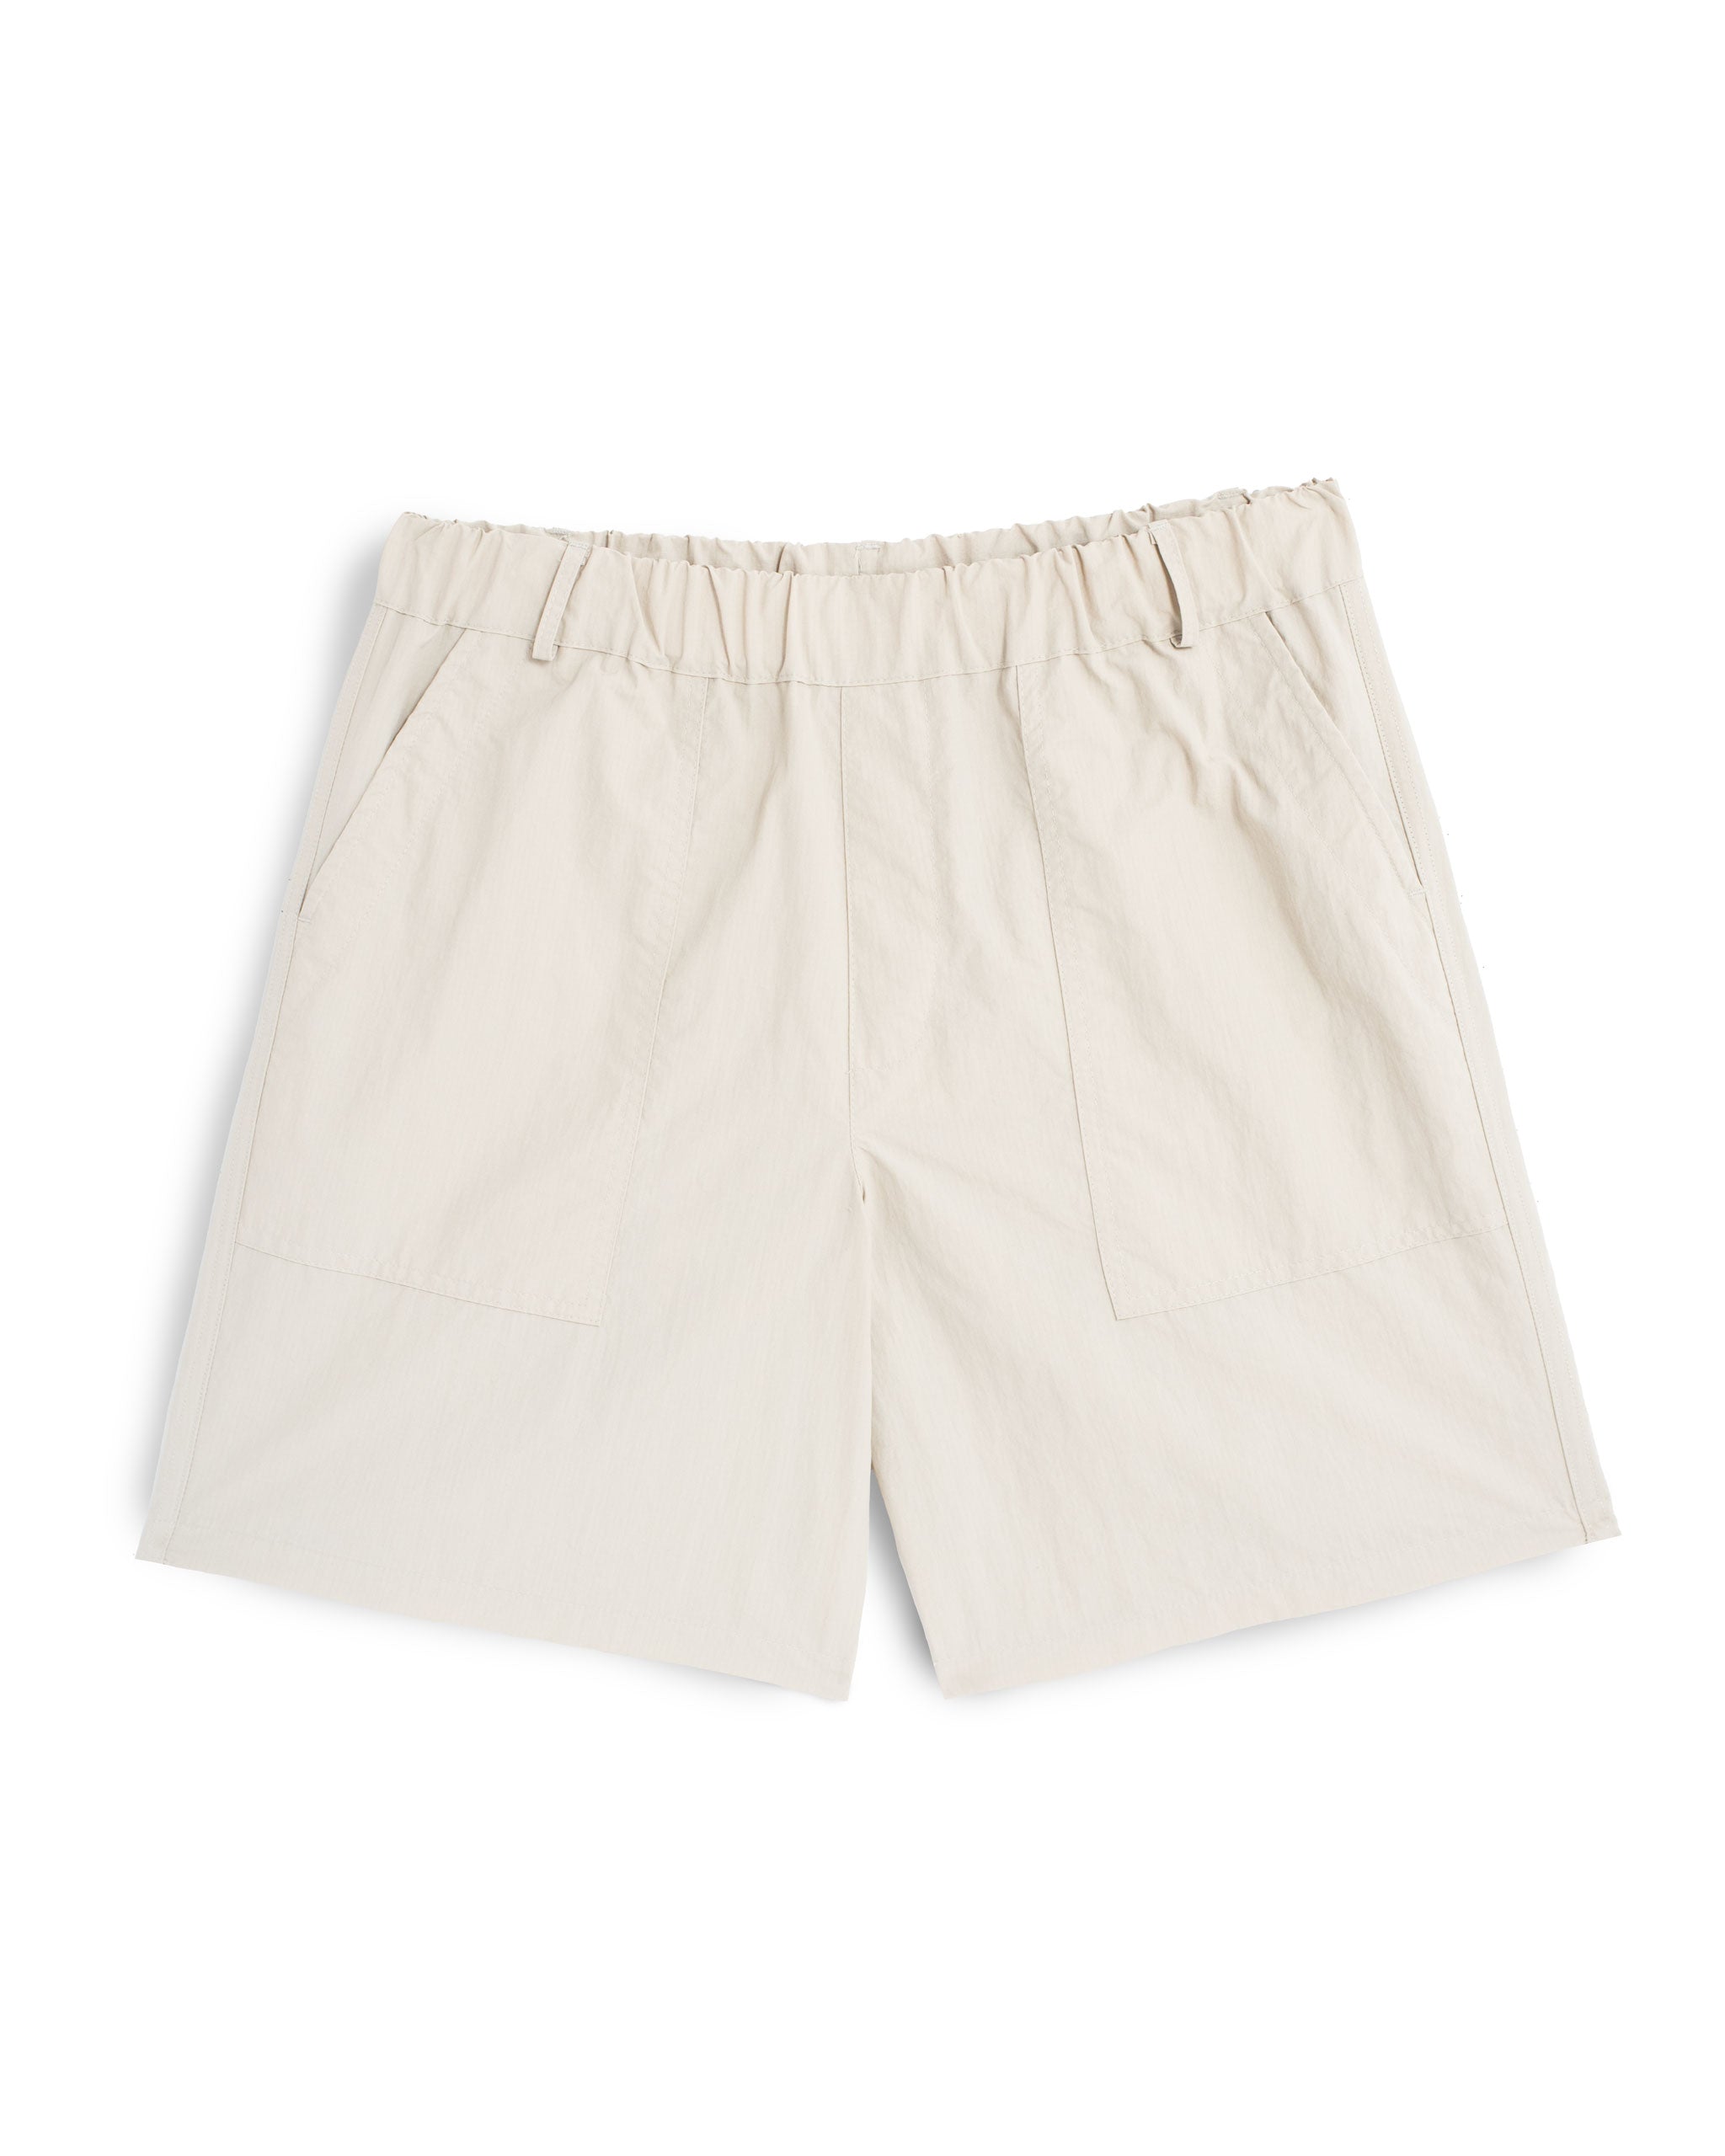 Cream utility shorts in Ripstop nylon fabric